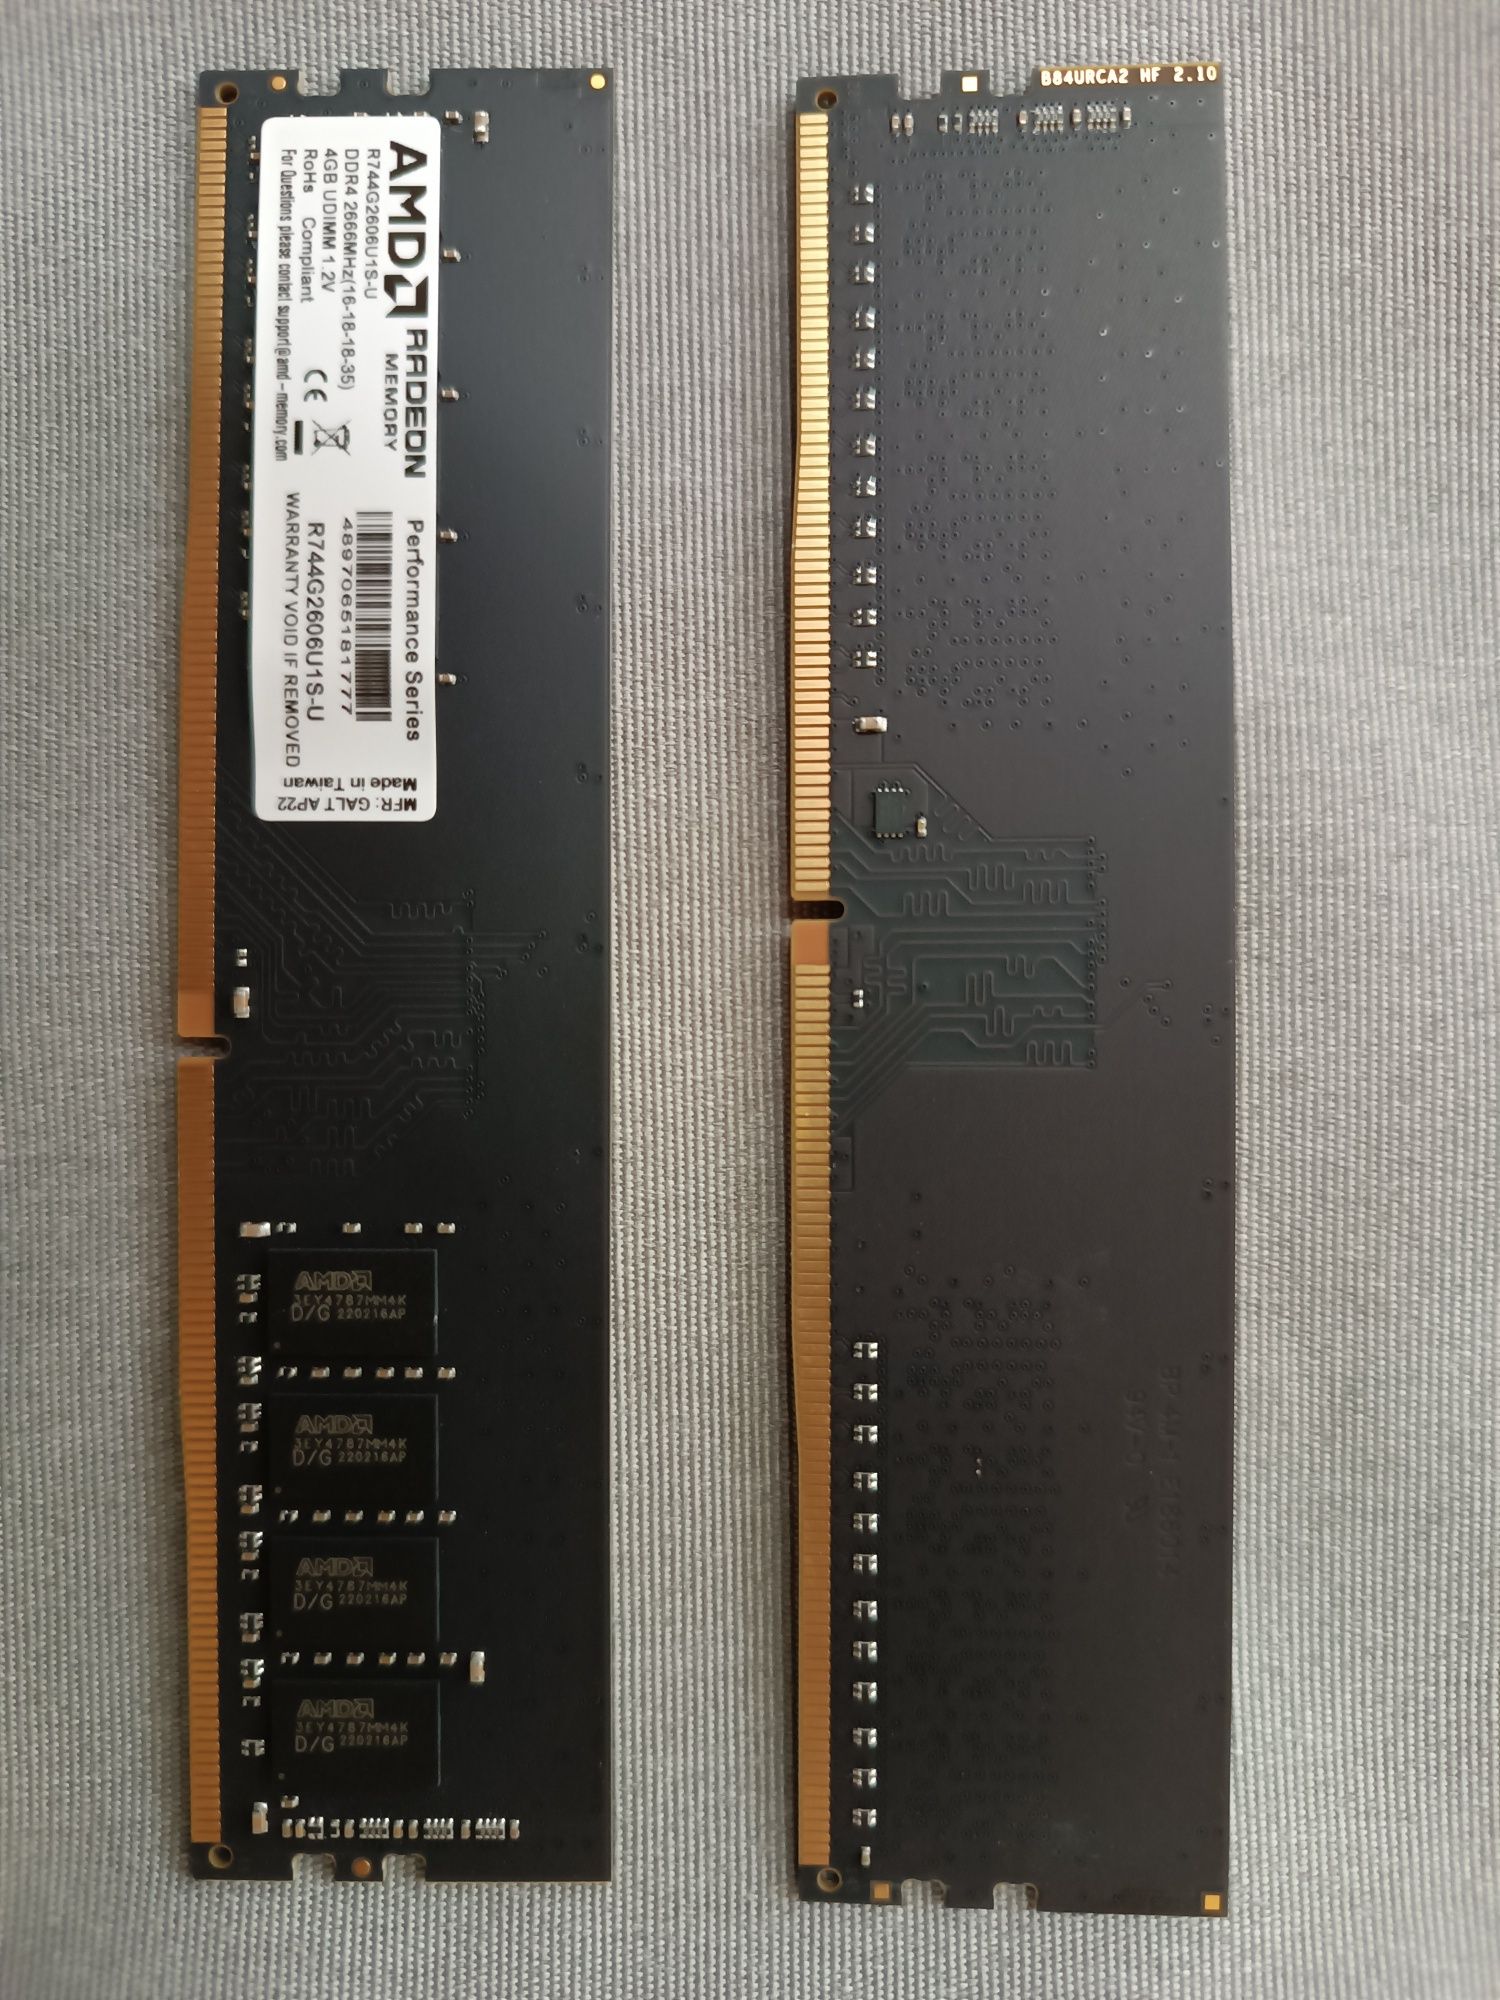 Kuchli Aperatifka Amd Radeon DDR 4 ga 4 dan 2 ta 8 gb orginal